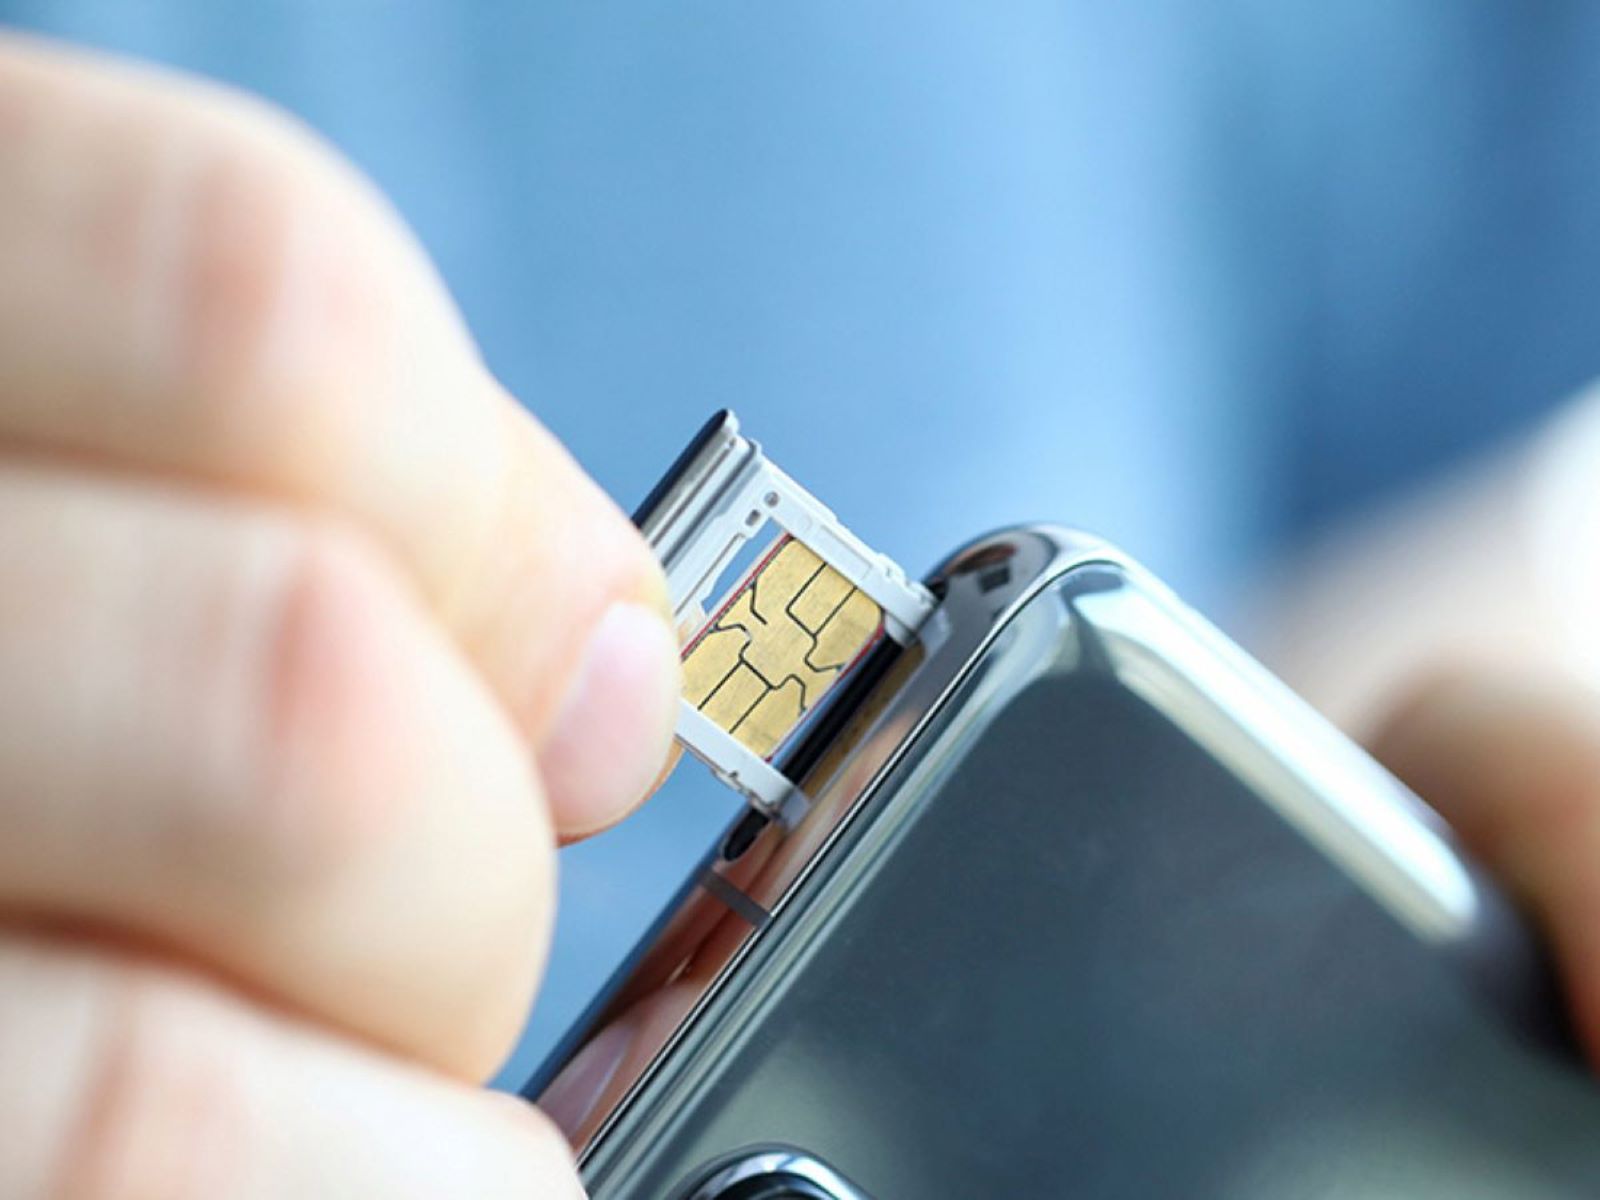 Erasing Data From A SIM Card